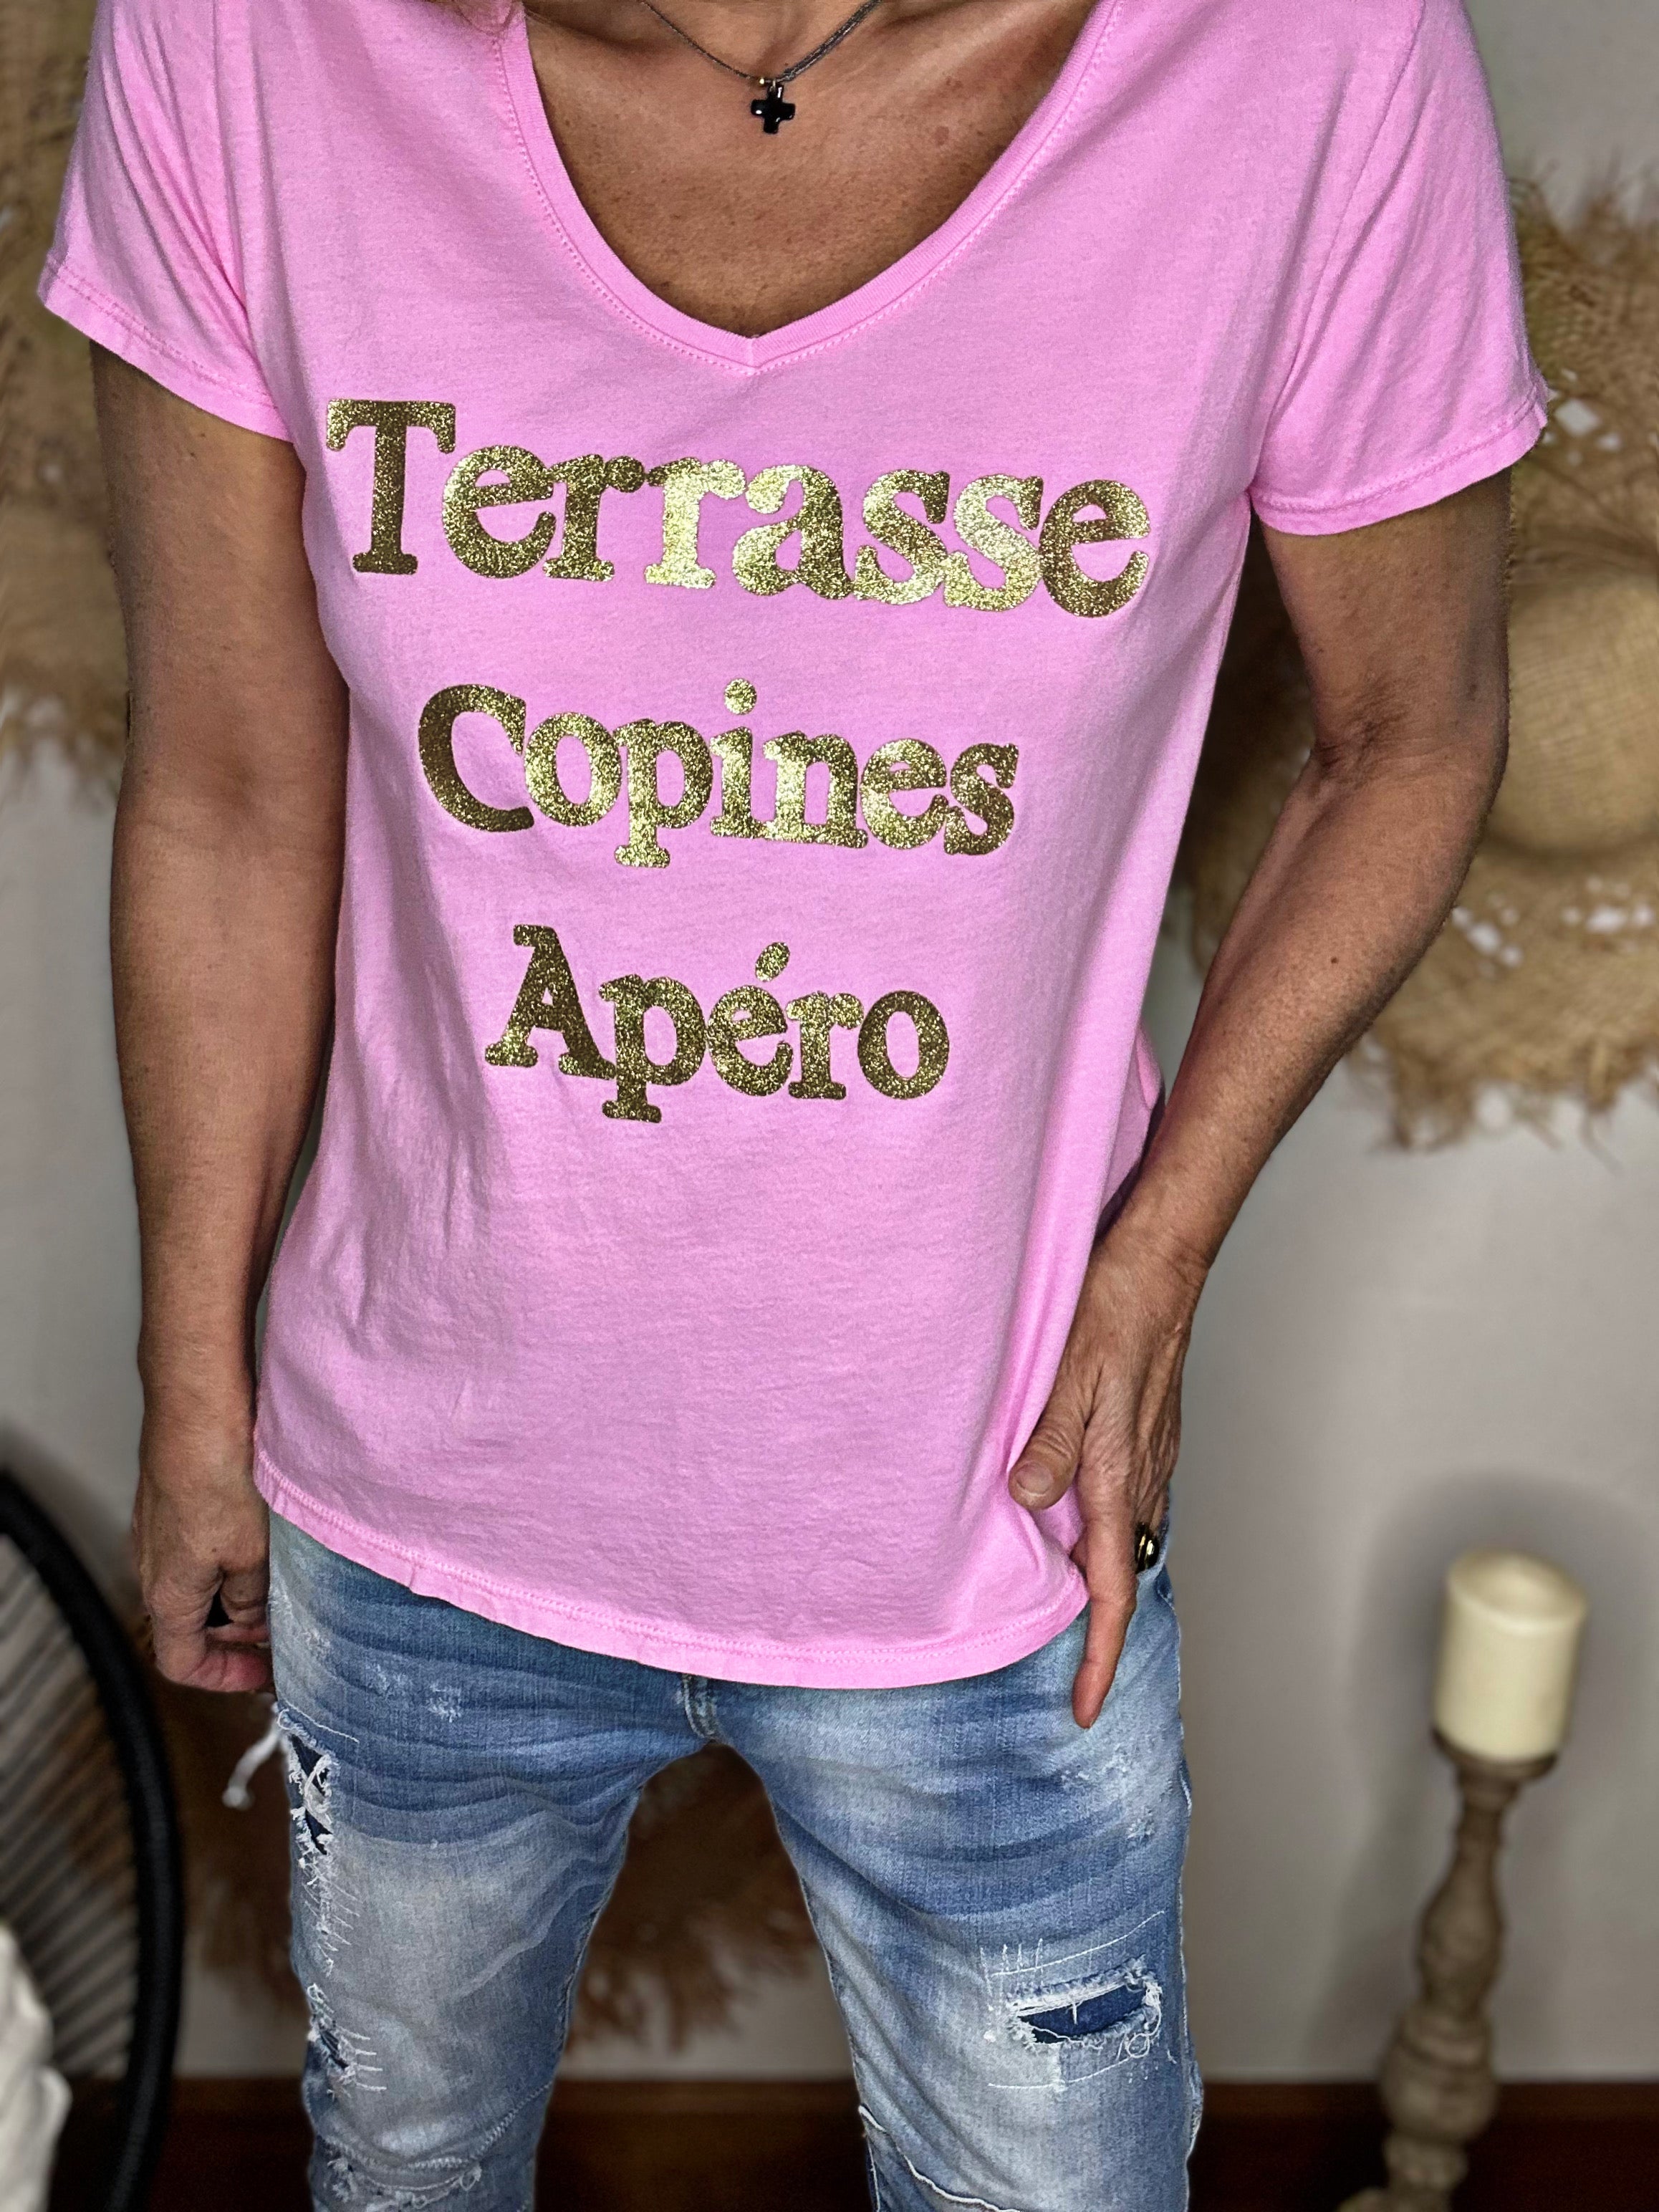 Tee shirt " Terrasse Copines Apéro " Rose malabar